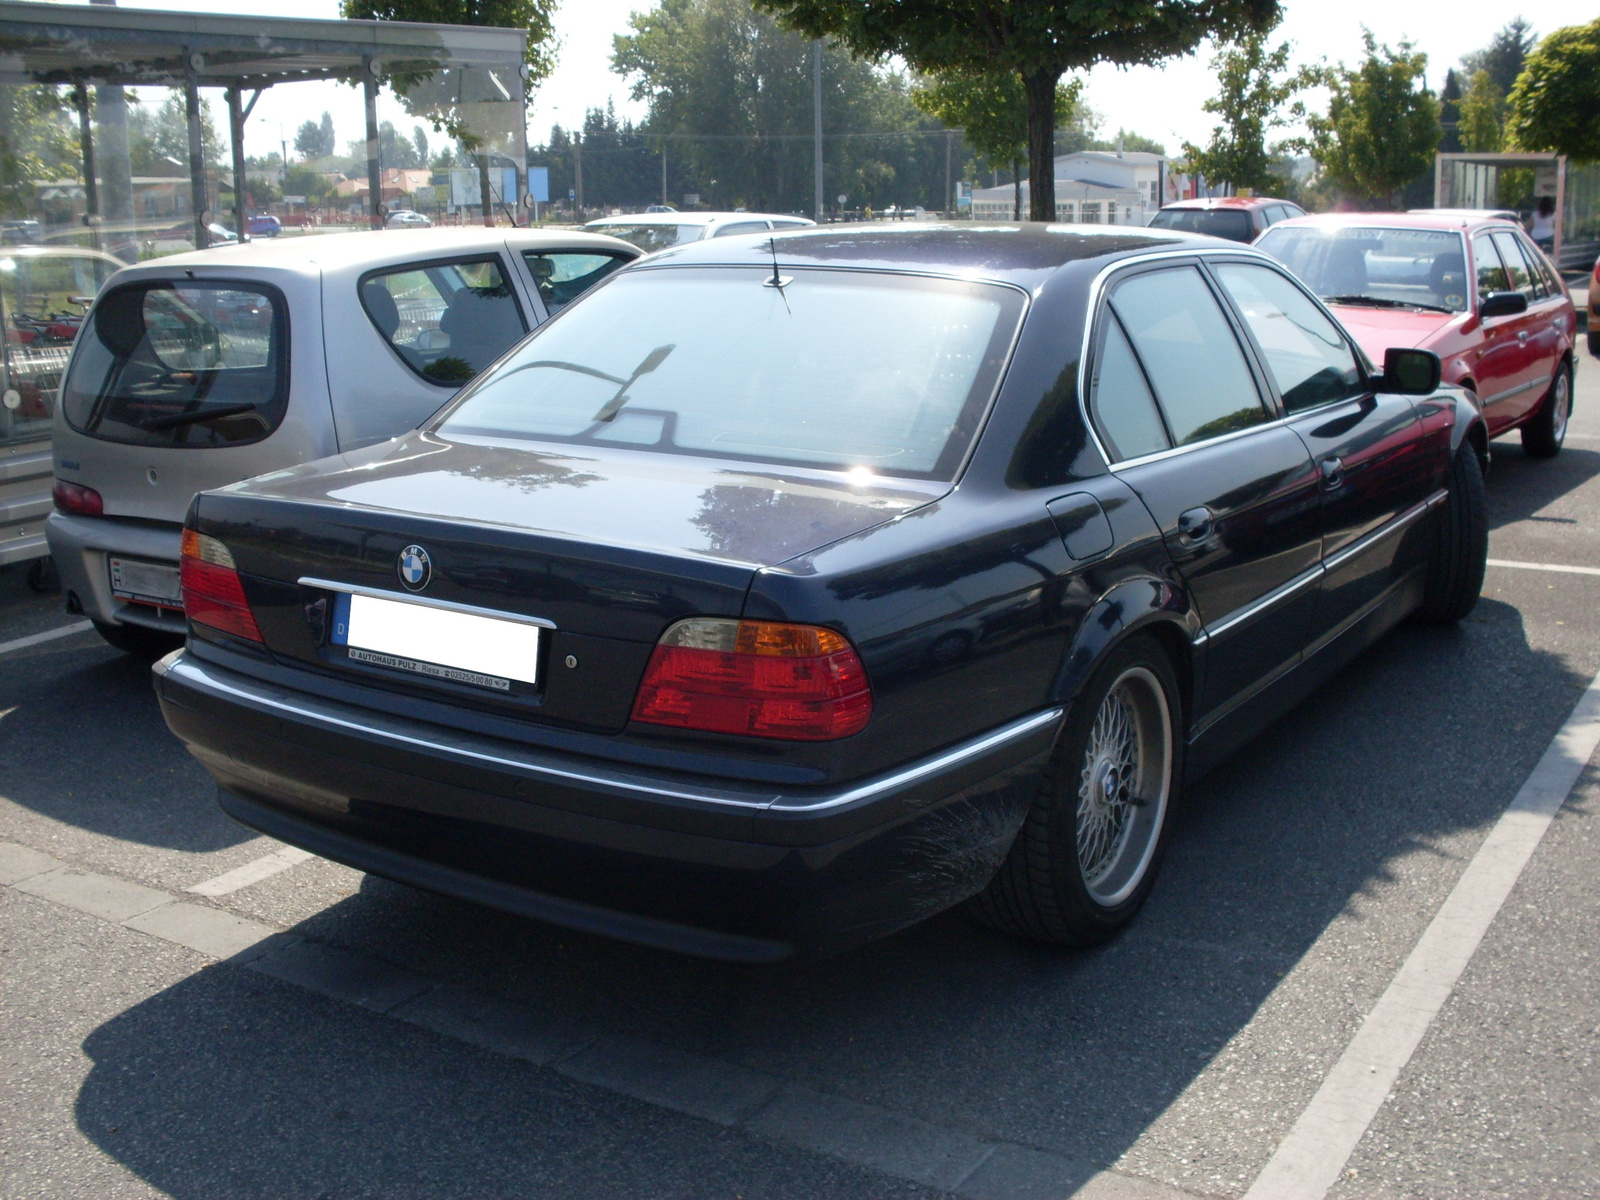 BMW 7-series (e38) facelift